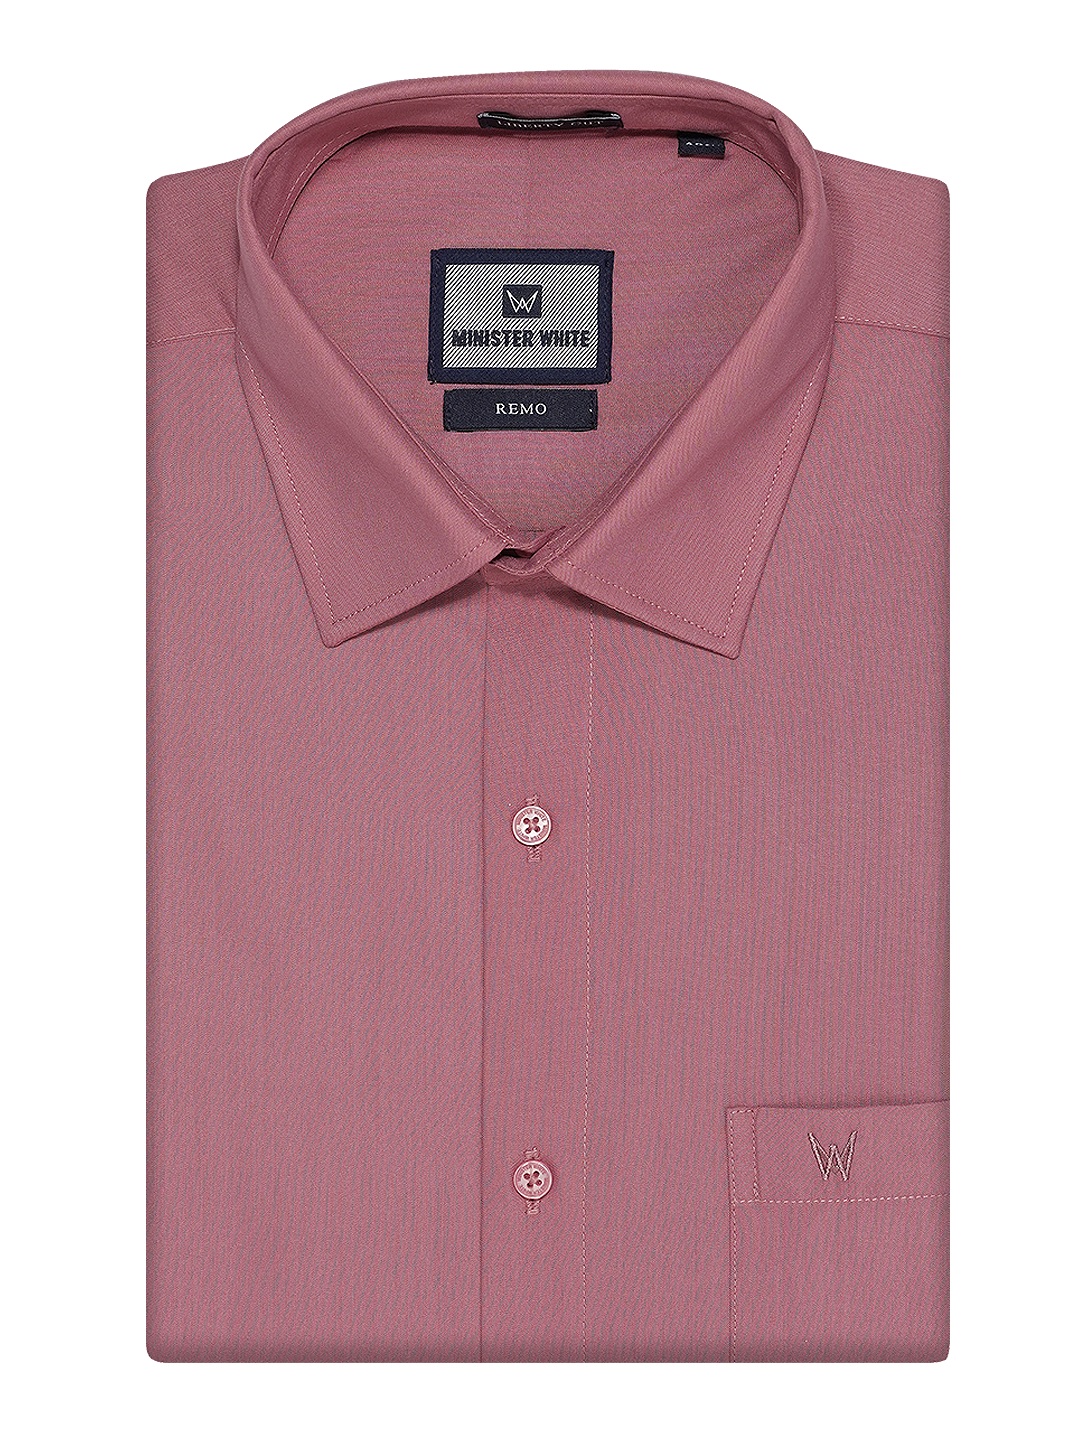 Mens Cotton Regular Fit Pink Colour Shirt Remo